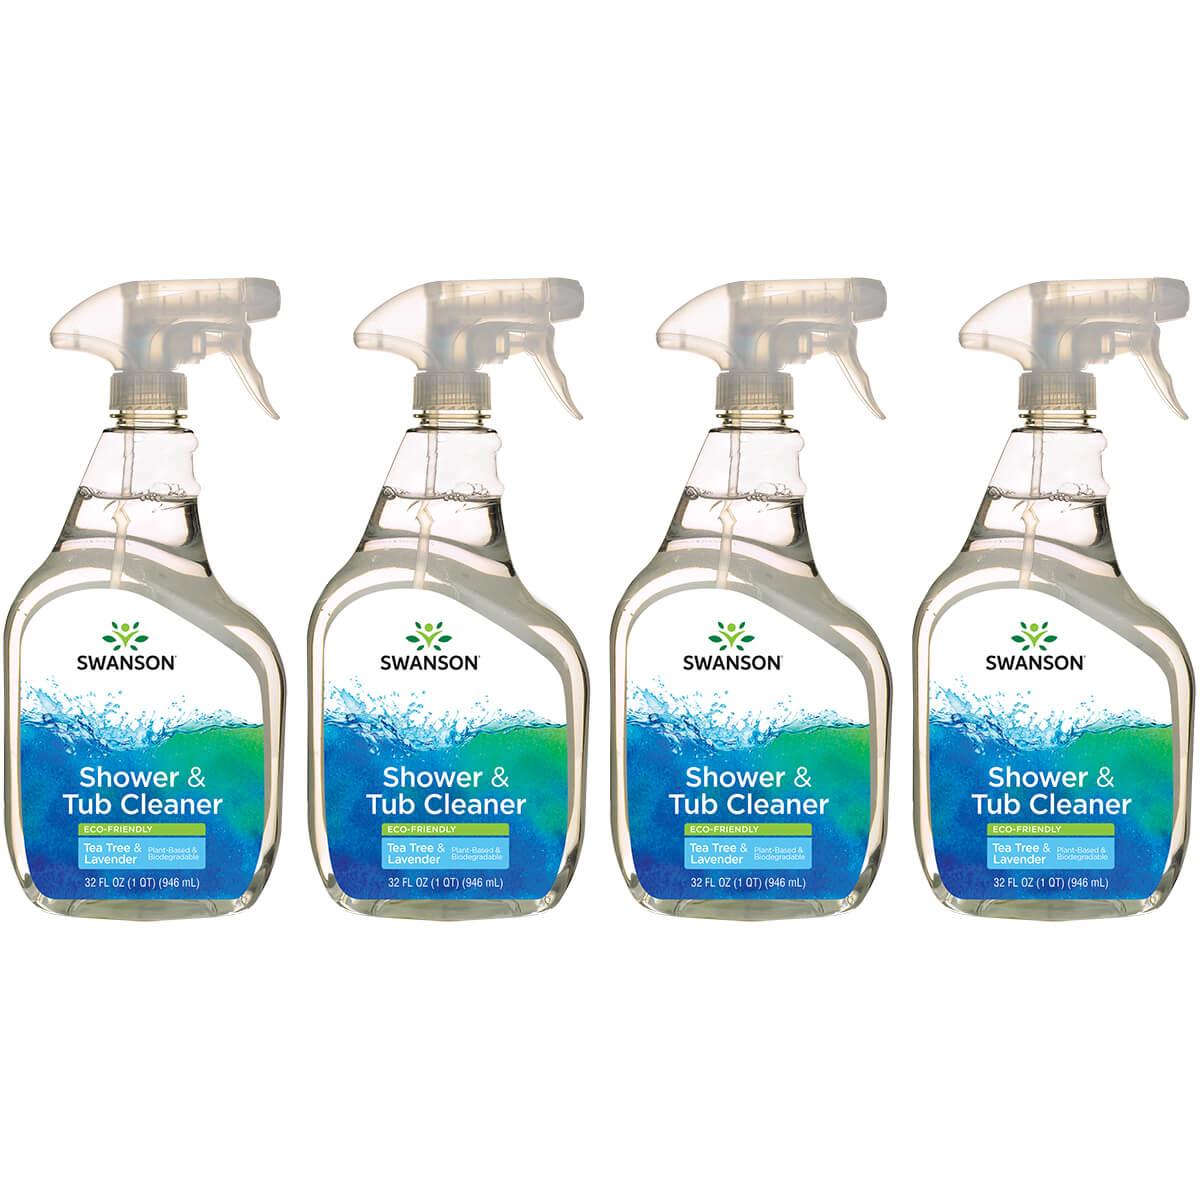 Swanson Healthy Home Shower & Tub Cleaner - Eco-Friendly Tea Tree Lavender 4 Pack 32 fl oz Liquid